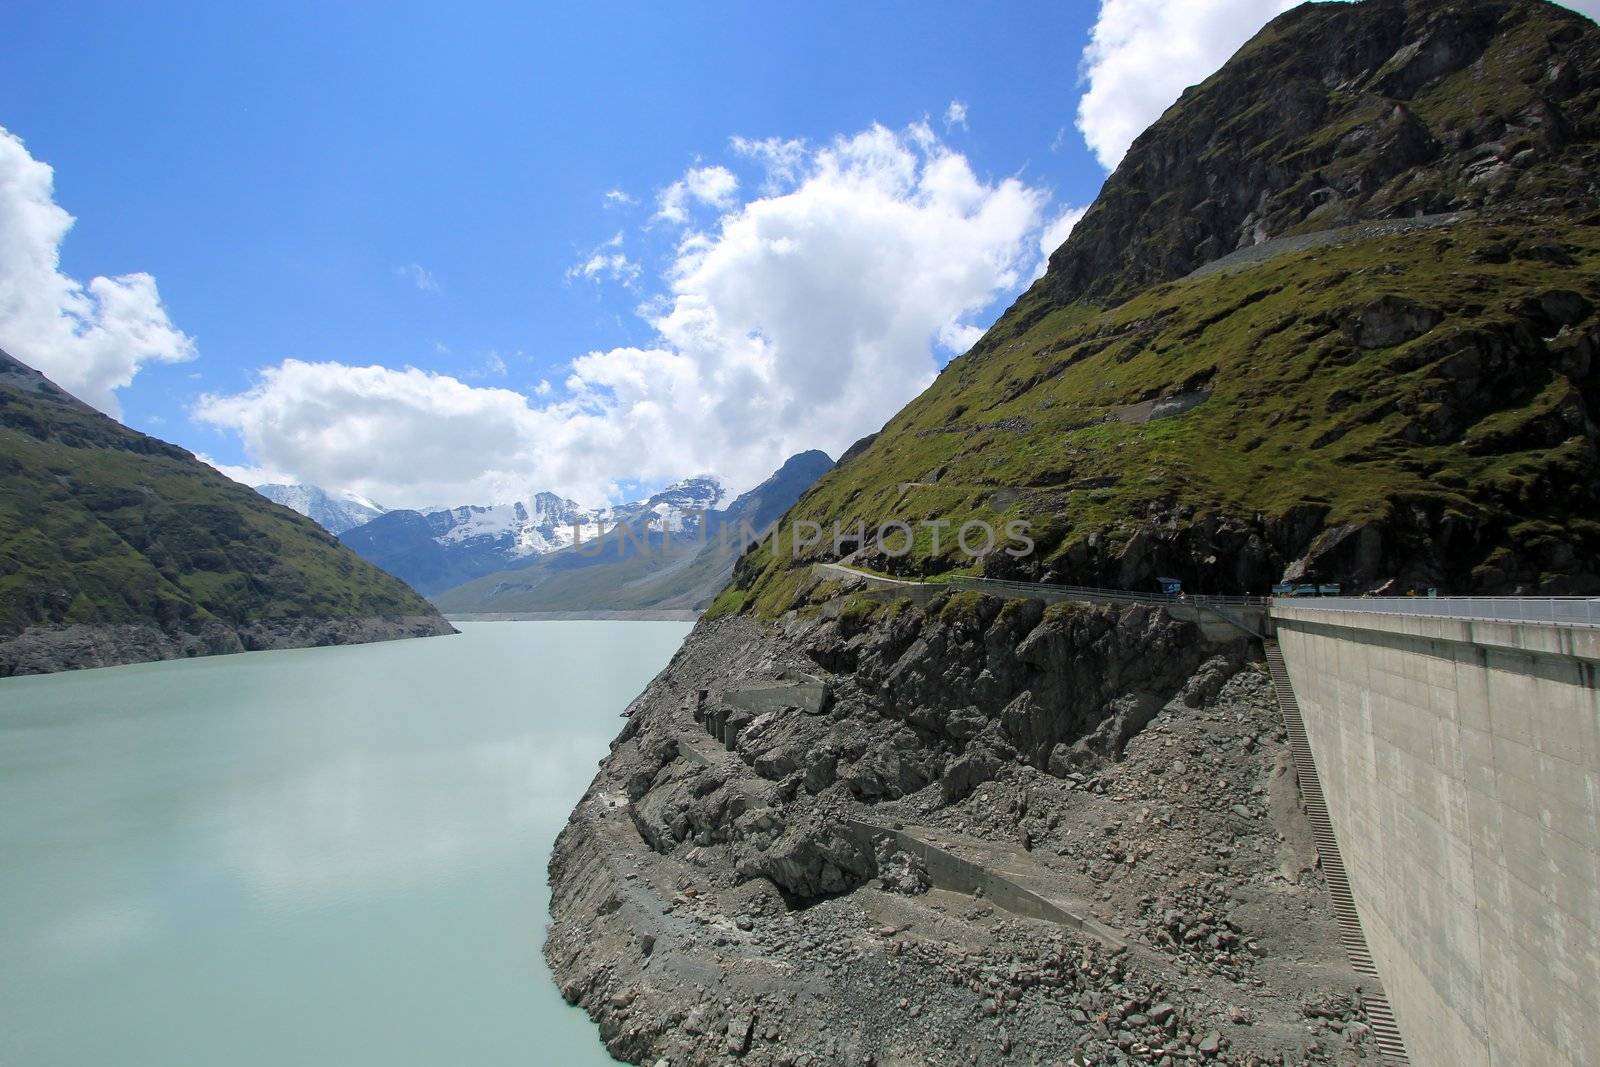 Lac des Dix and dam, Grande Dixence, Switzerland by Elenaphotos21